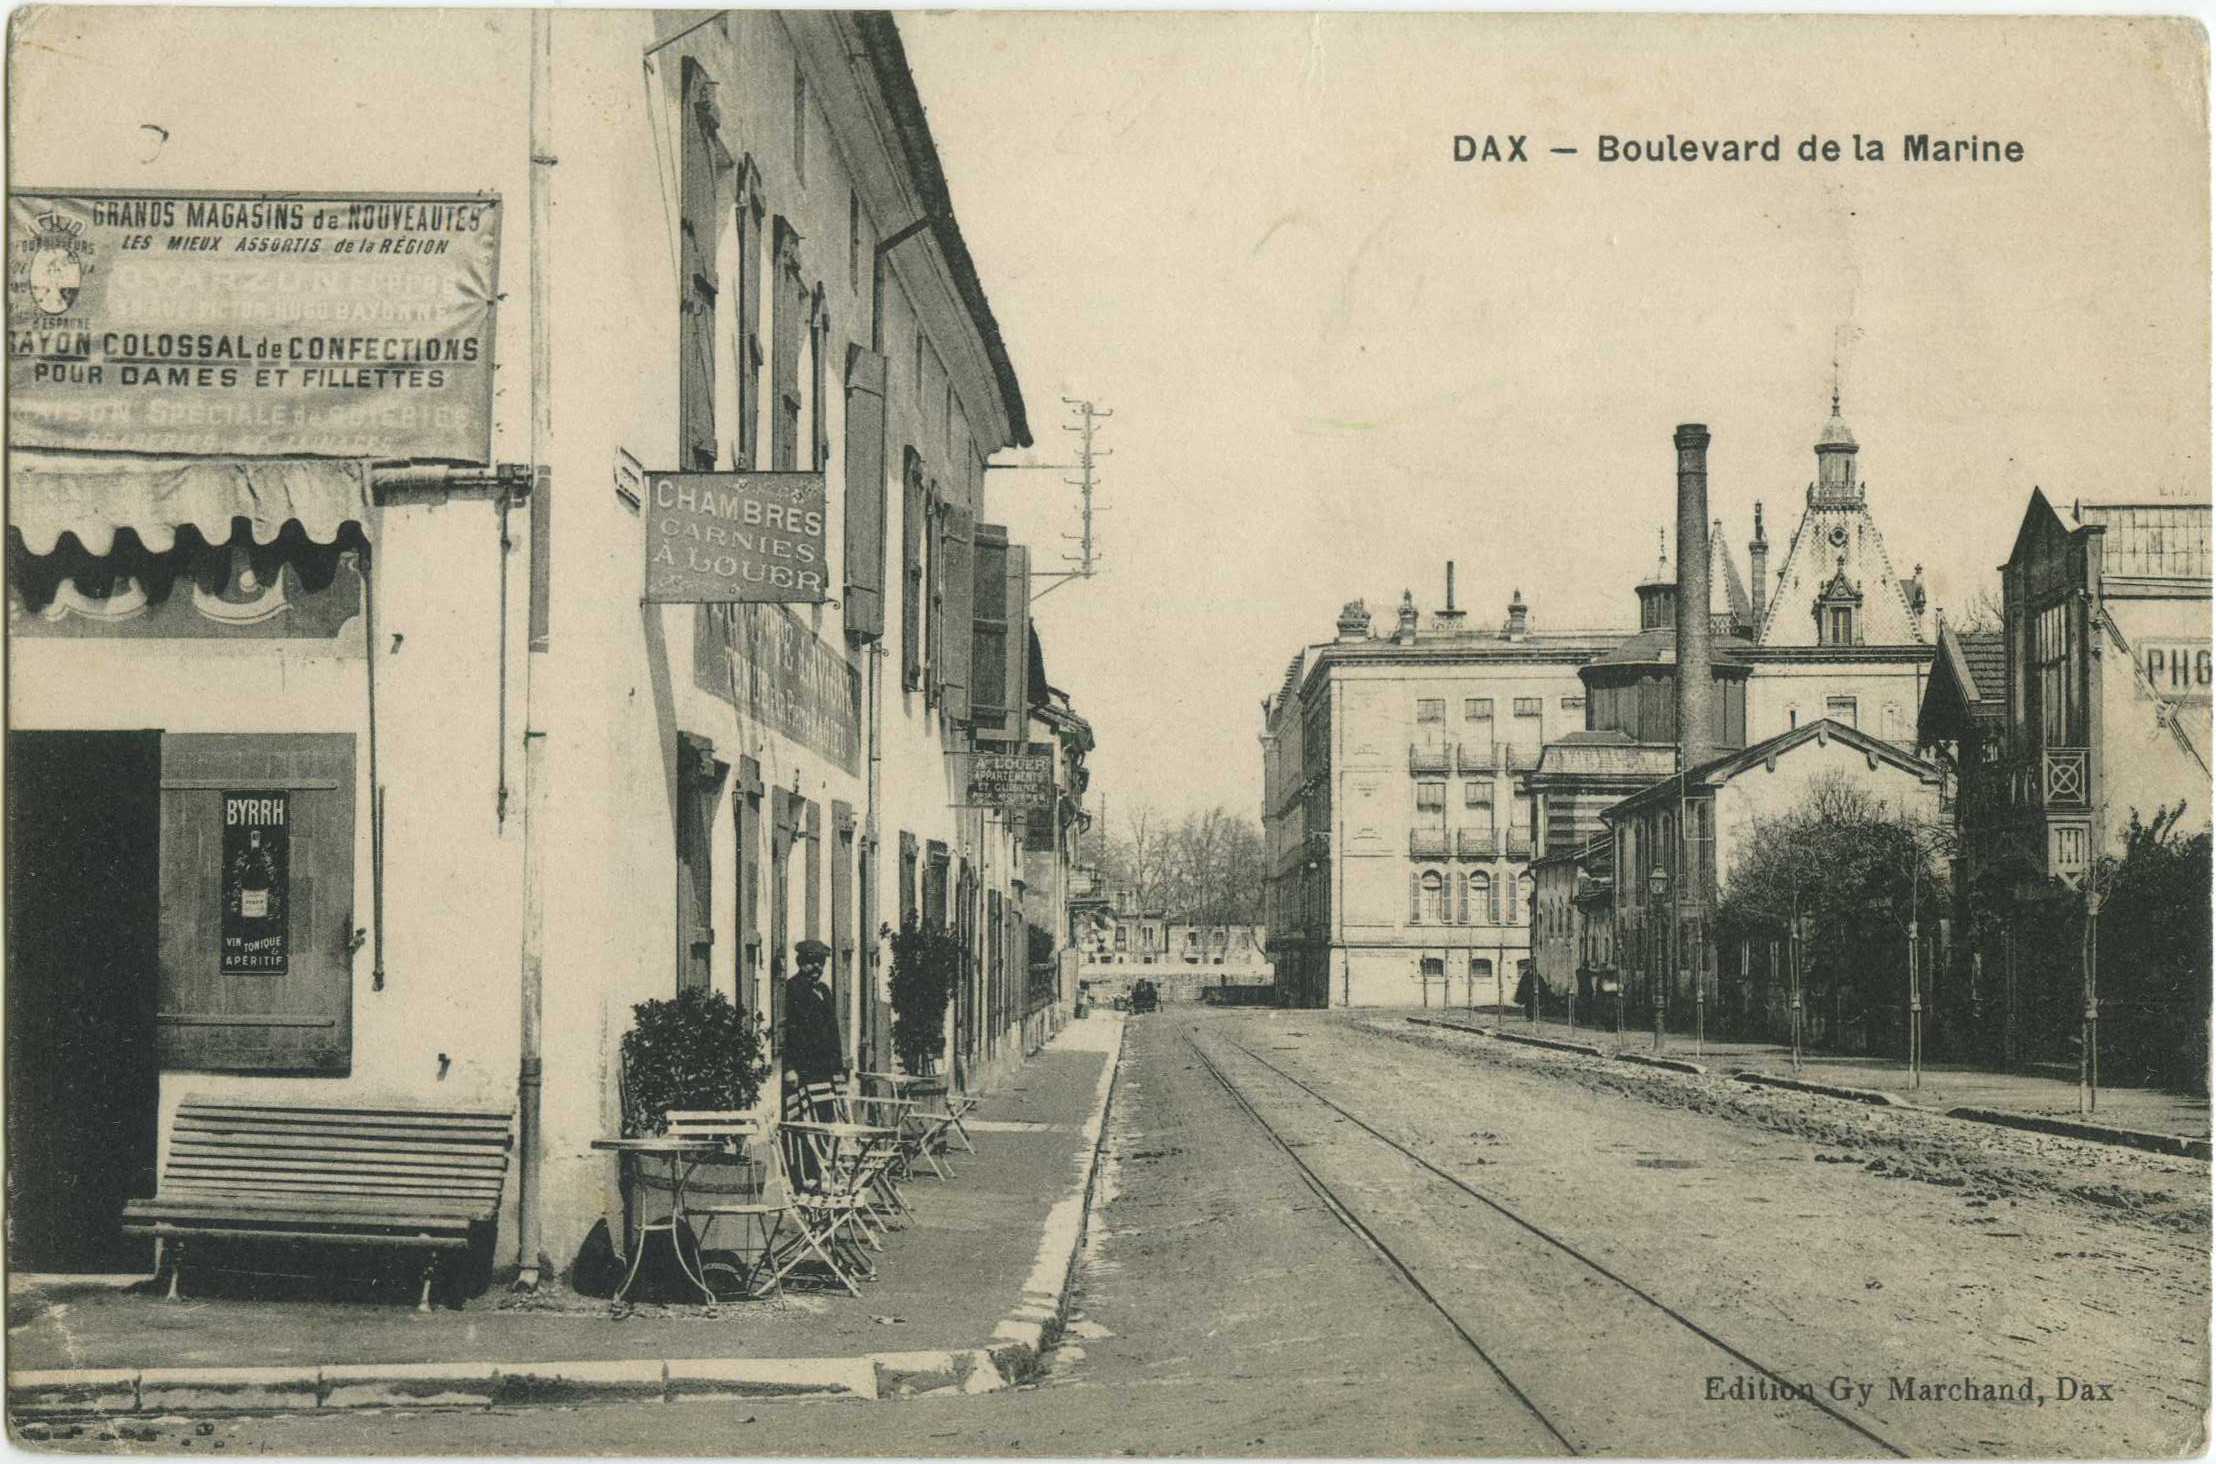 Dax - Boulevard de la Marine